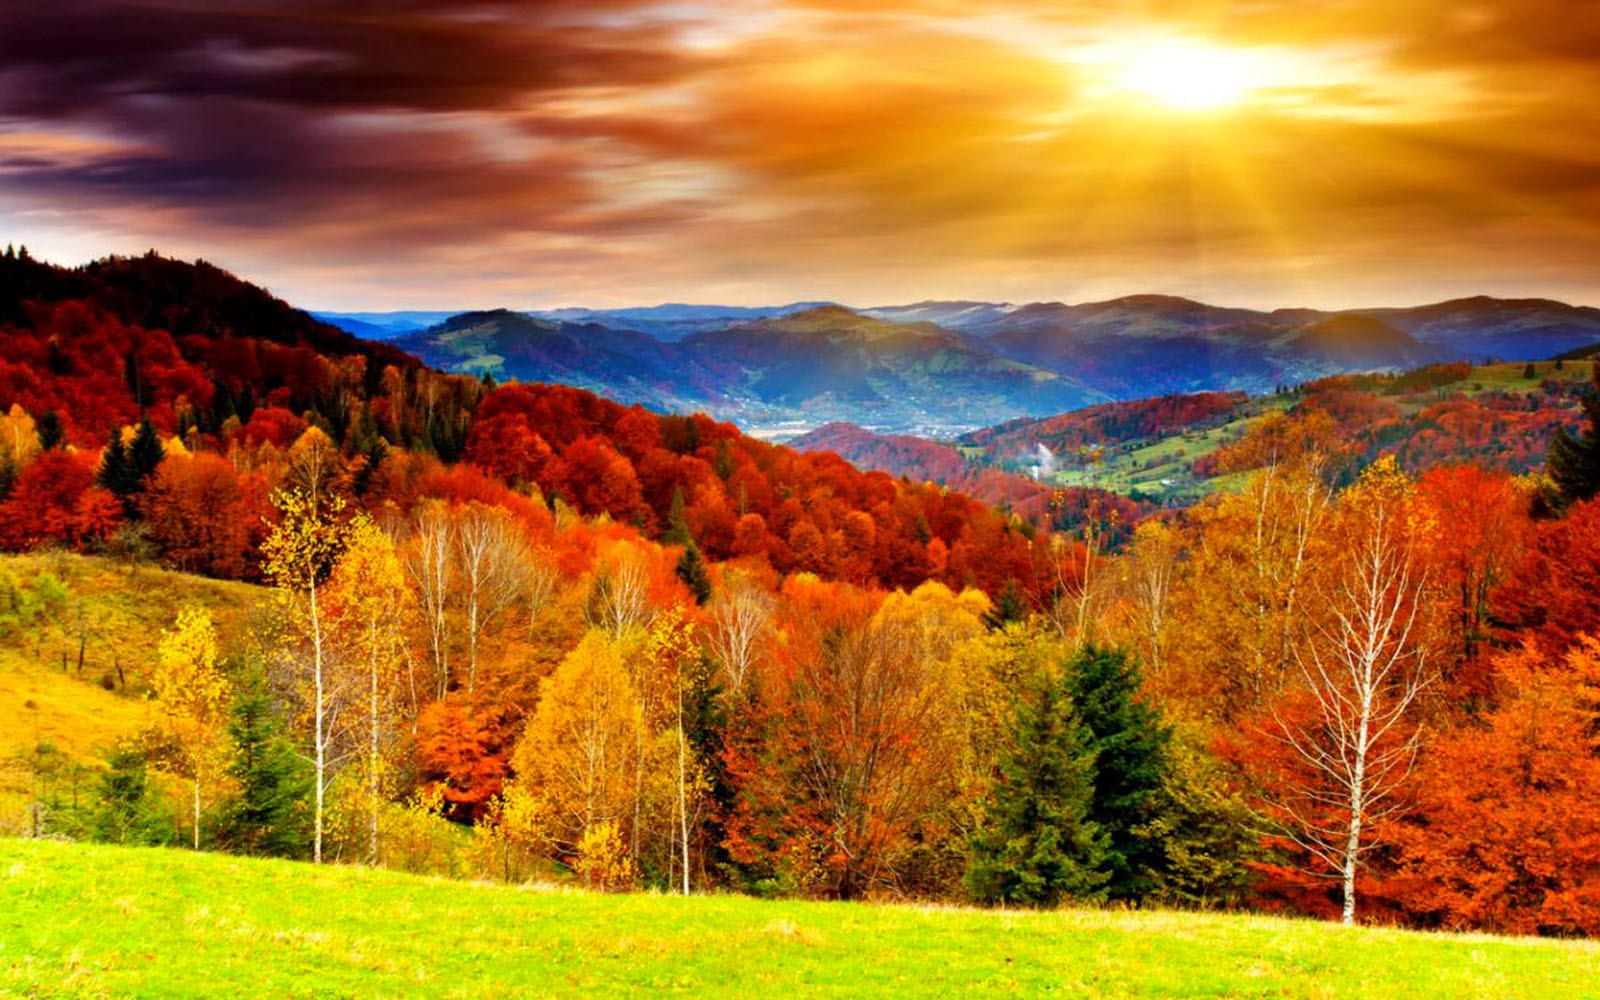 77+] Free Autumn Desktop Backgrounds - WallpaperSafari